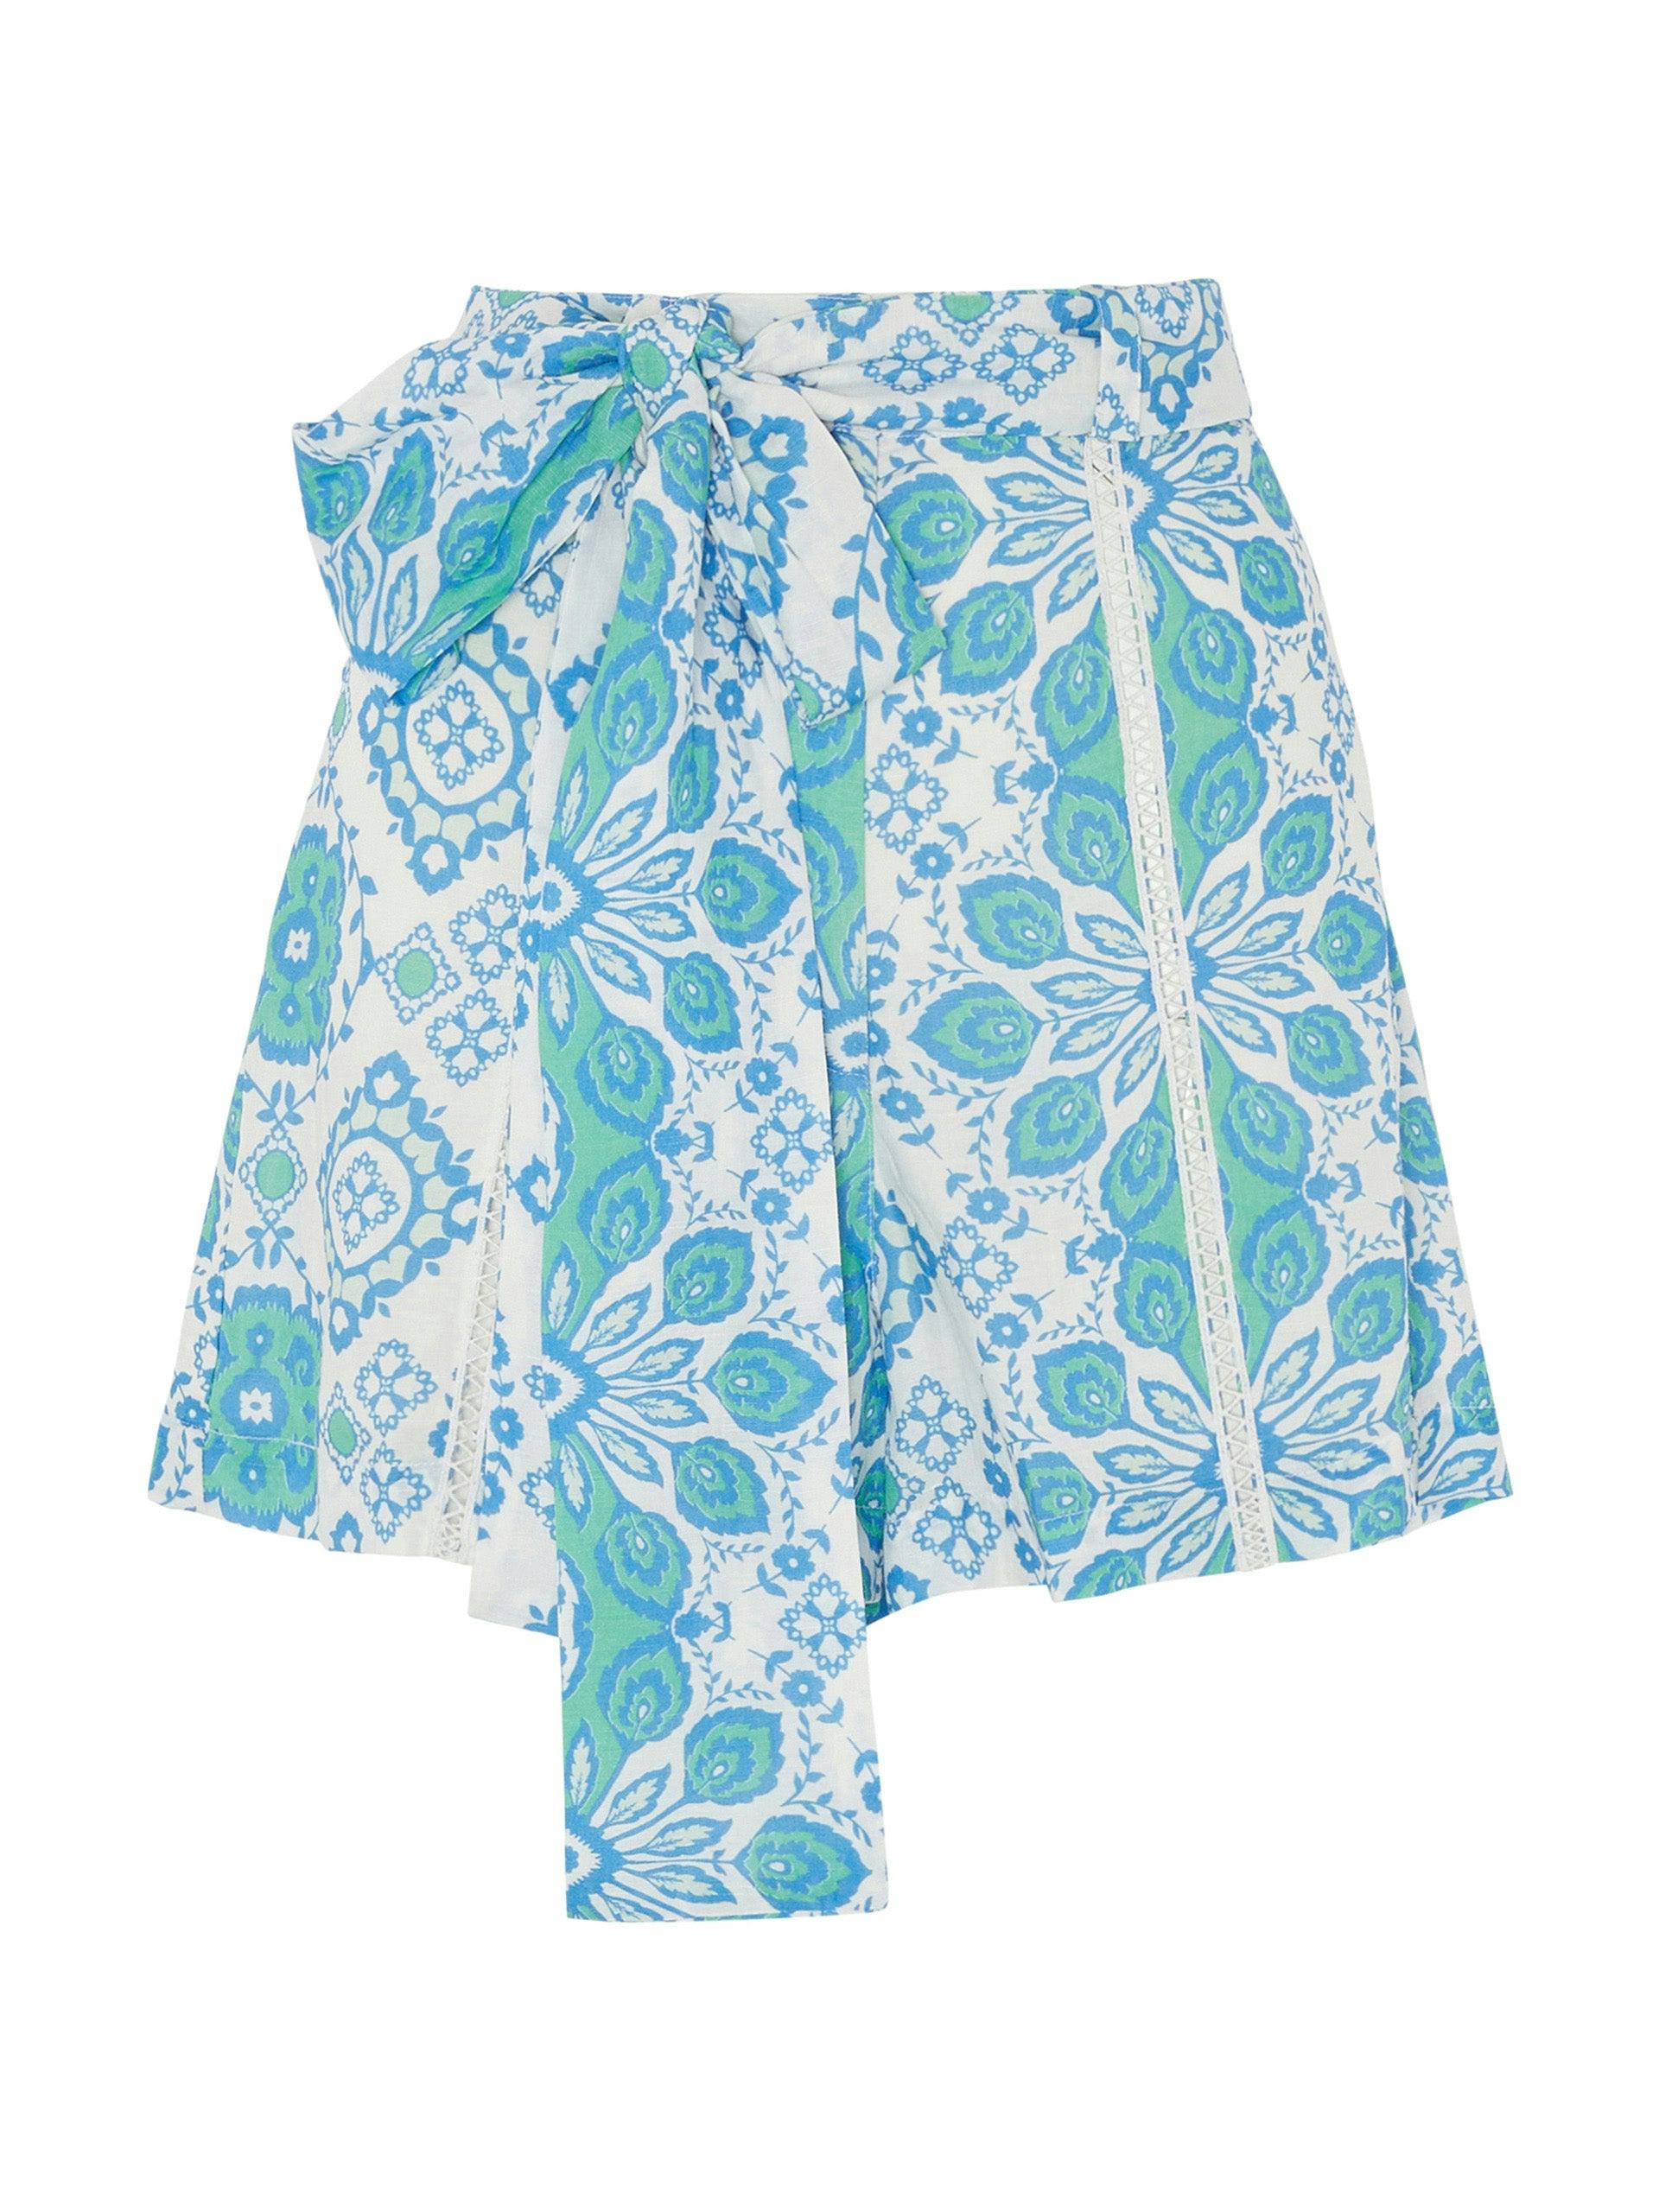 Petra shorts in floral Lenzing linen